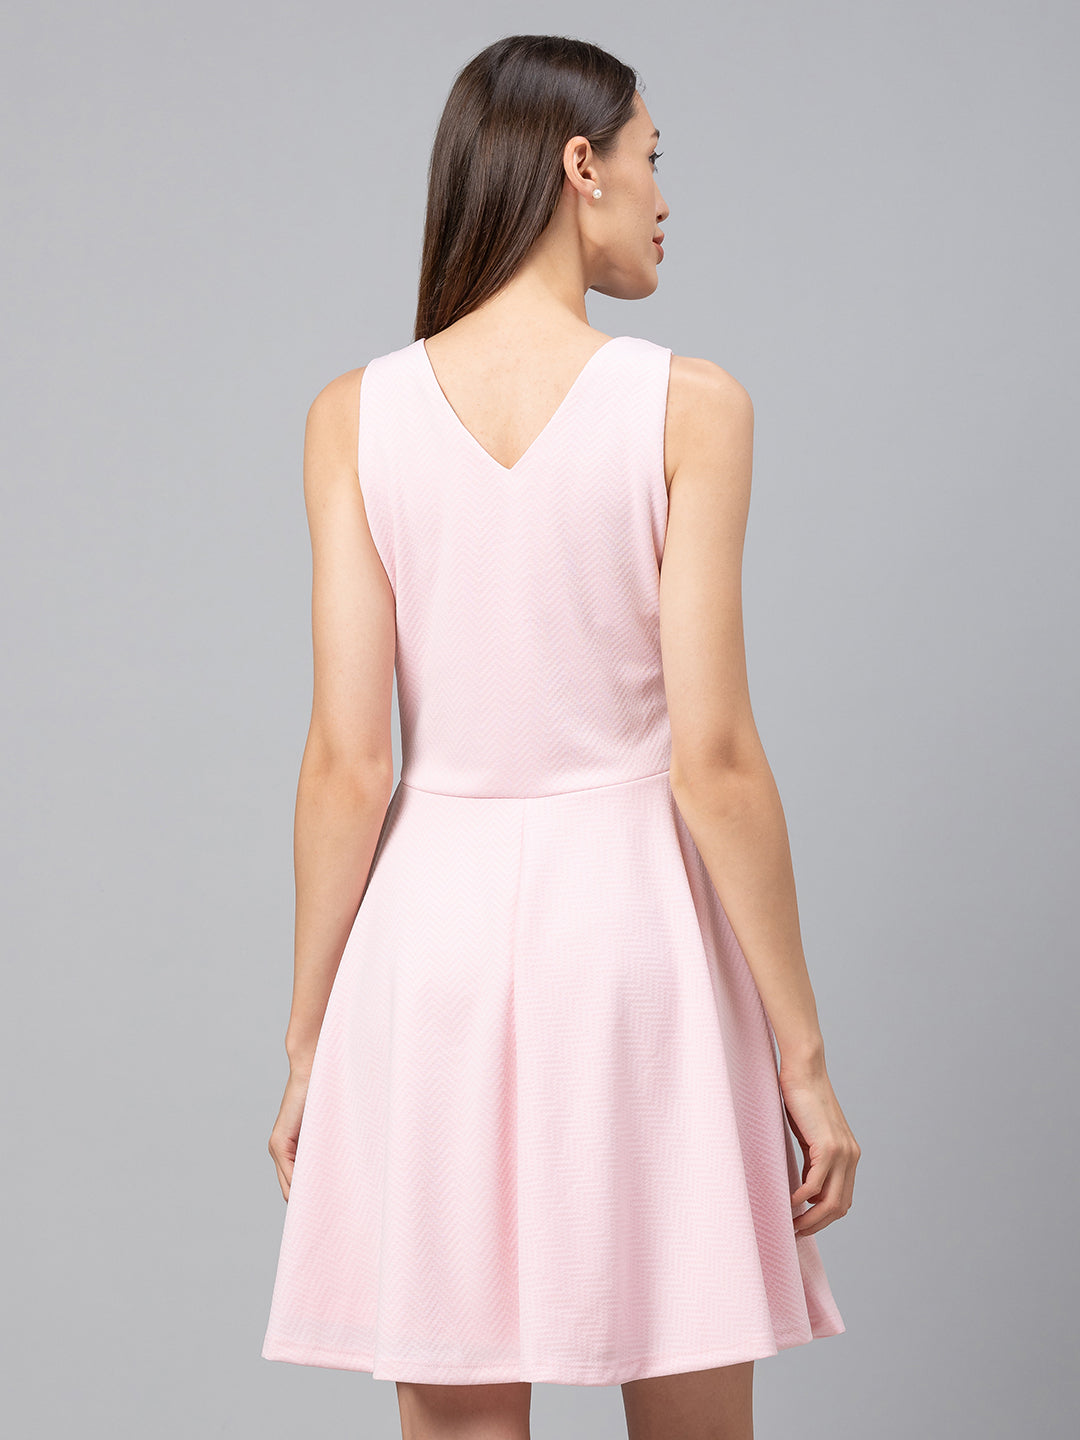 Globus Pink Solid Dress